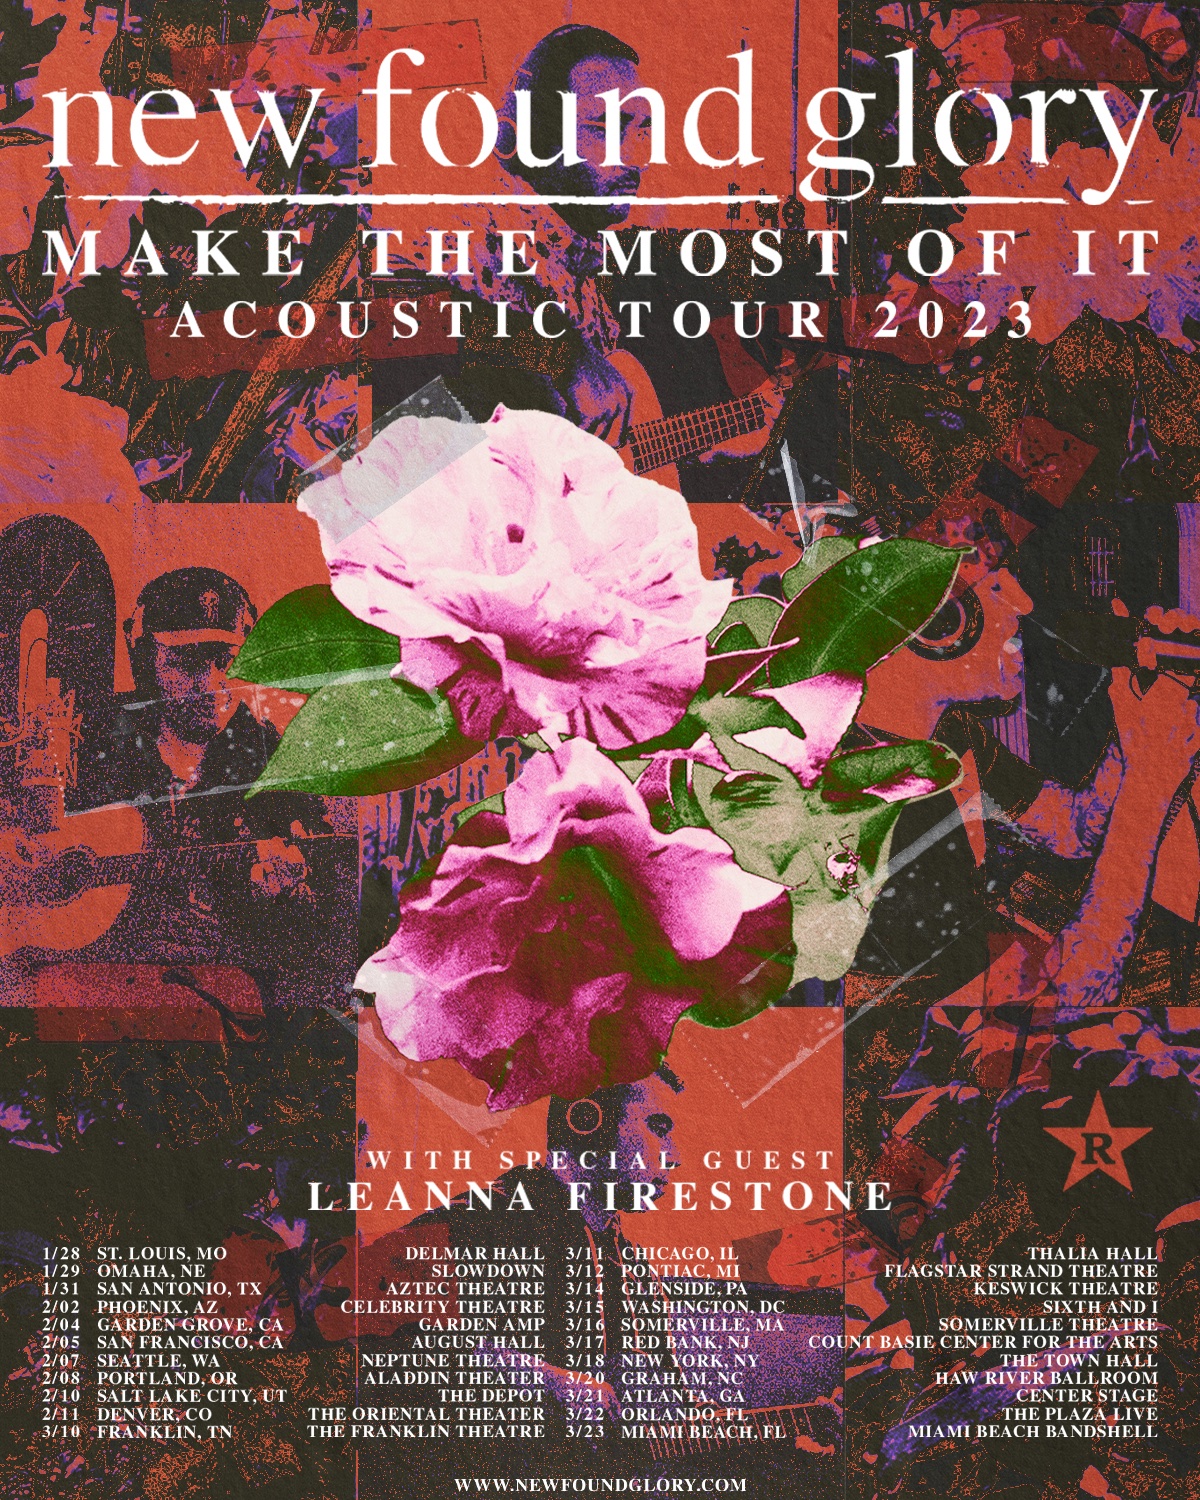 New Found Glory tour dates